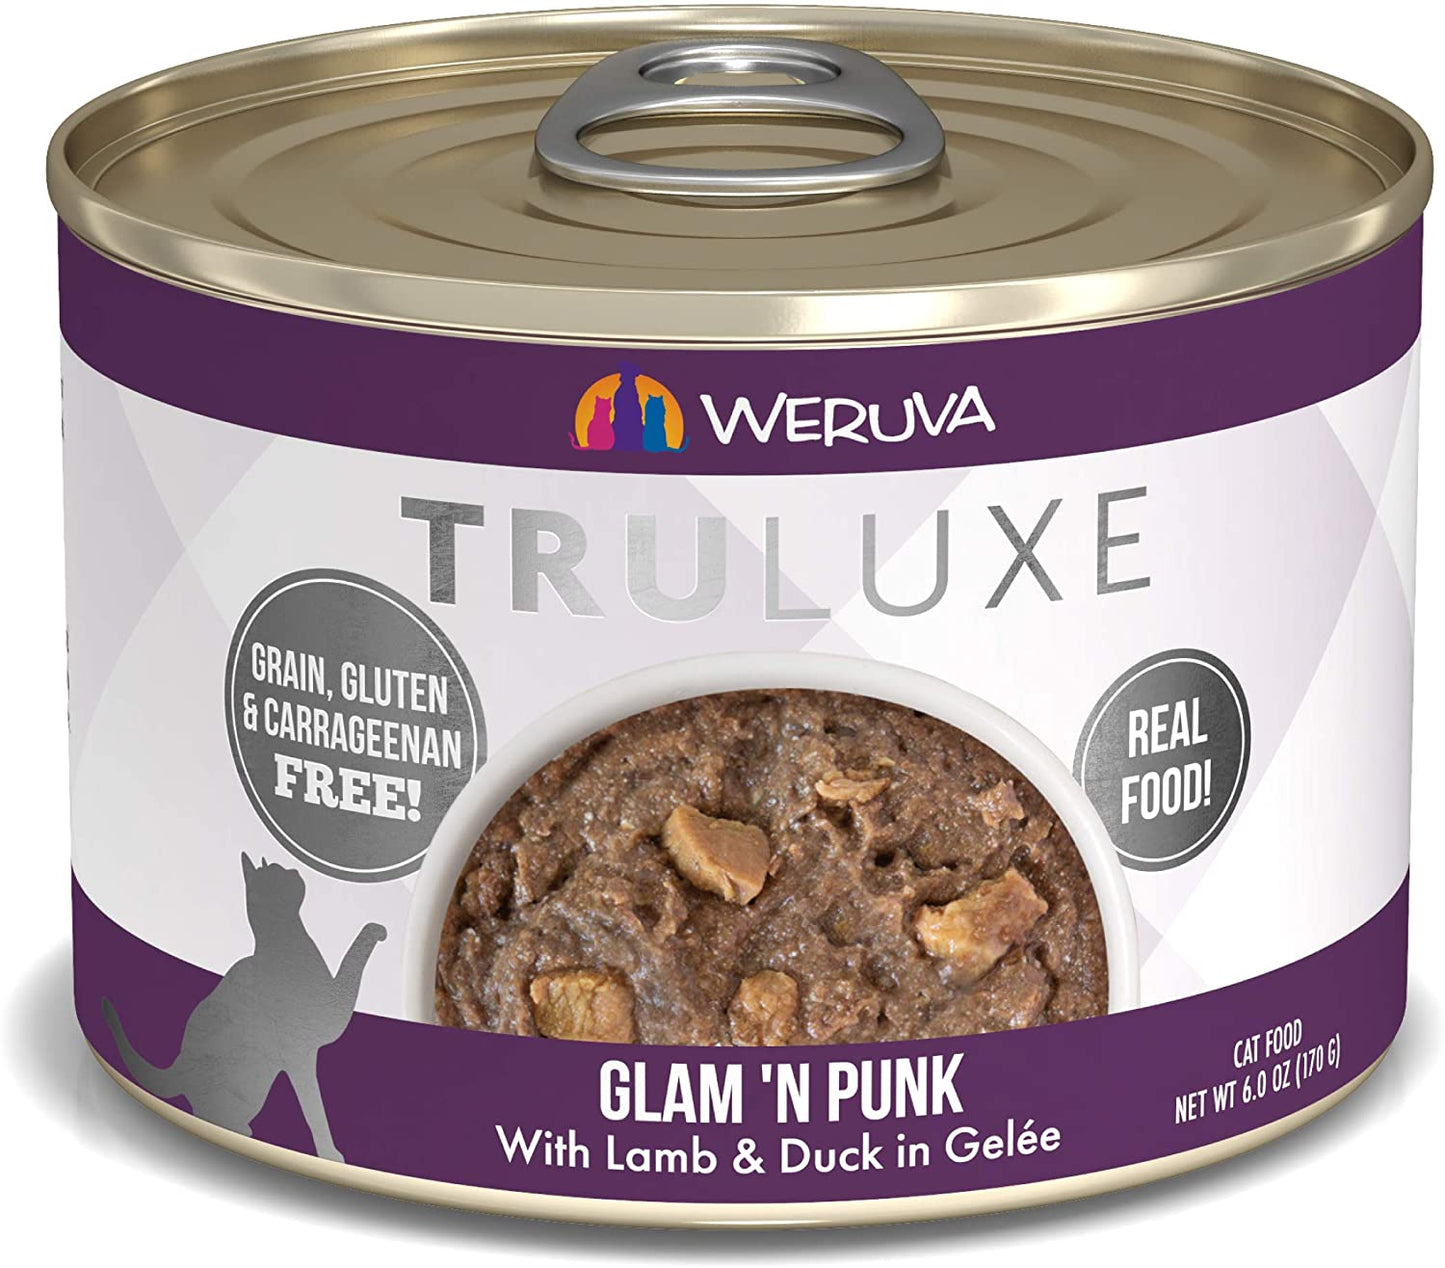 Weruva TruLuxe Glam 'N Punk with Lamb & Duck in Gelee